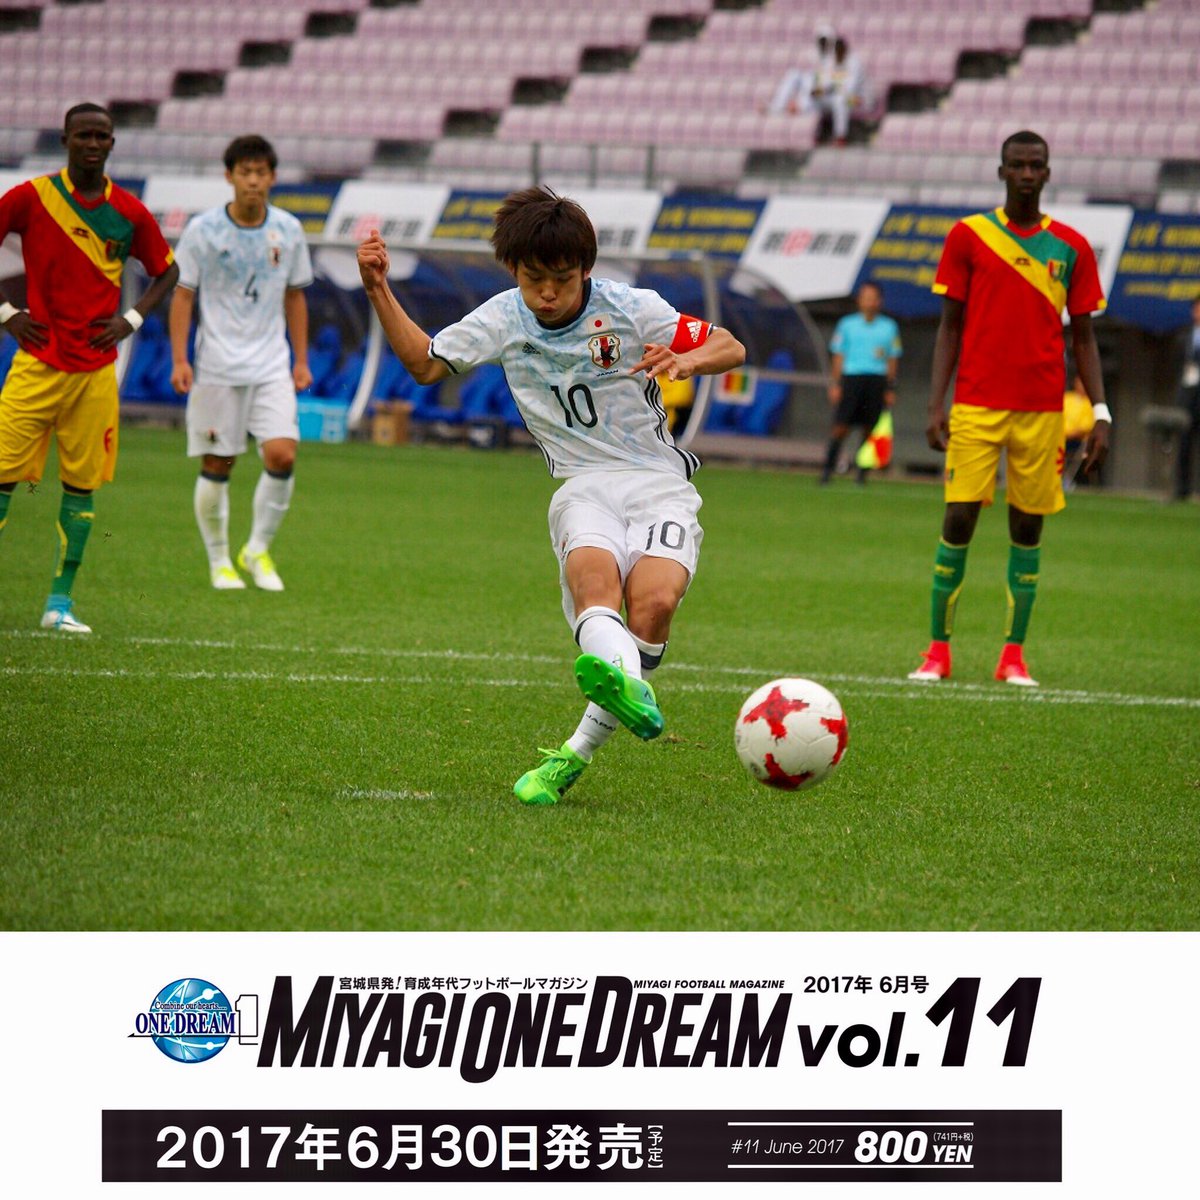 Miyagi One Dream インターナショナルドリームカップ17 宮城 仙台 U 16日本代表 5 0 U 16ギニア代表 U 16日本代表を奇跡の大逆転優勝に導くハットトリックを決めた斉藤光毅選手